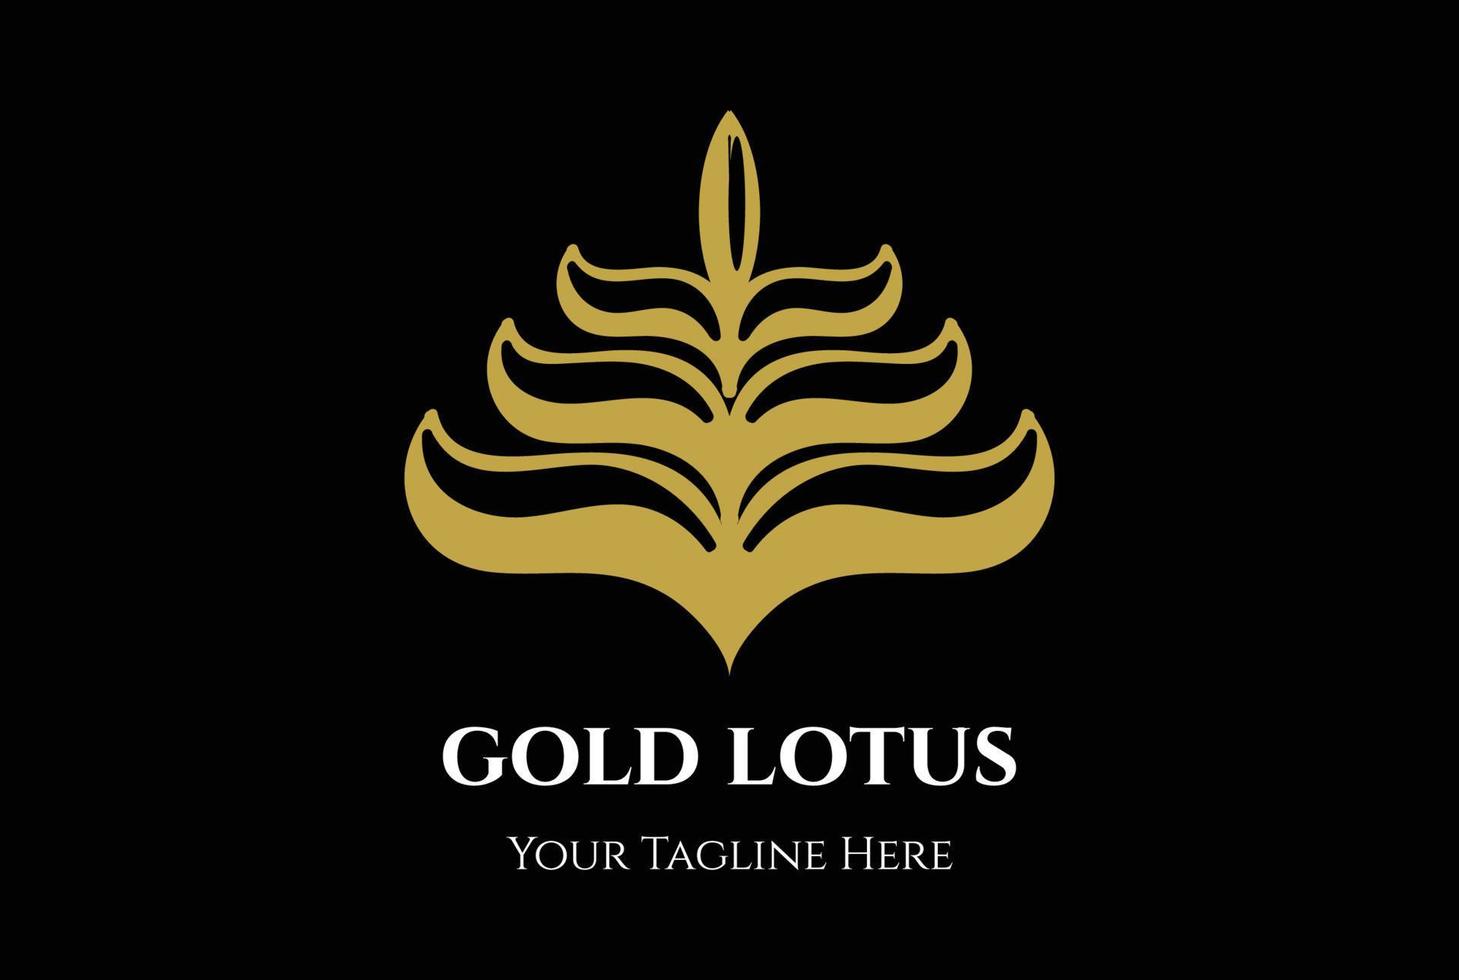 Simple Minimalist Golden Lotus Leaf Flower for Beauty Care Cosmetic Spa Salon Logo Design Inspiration vector